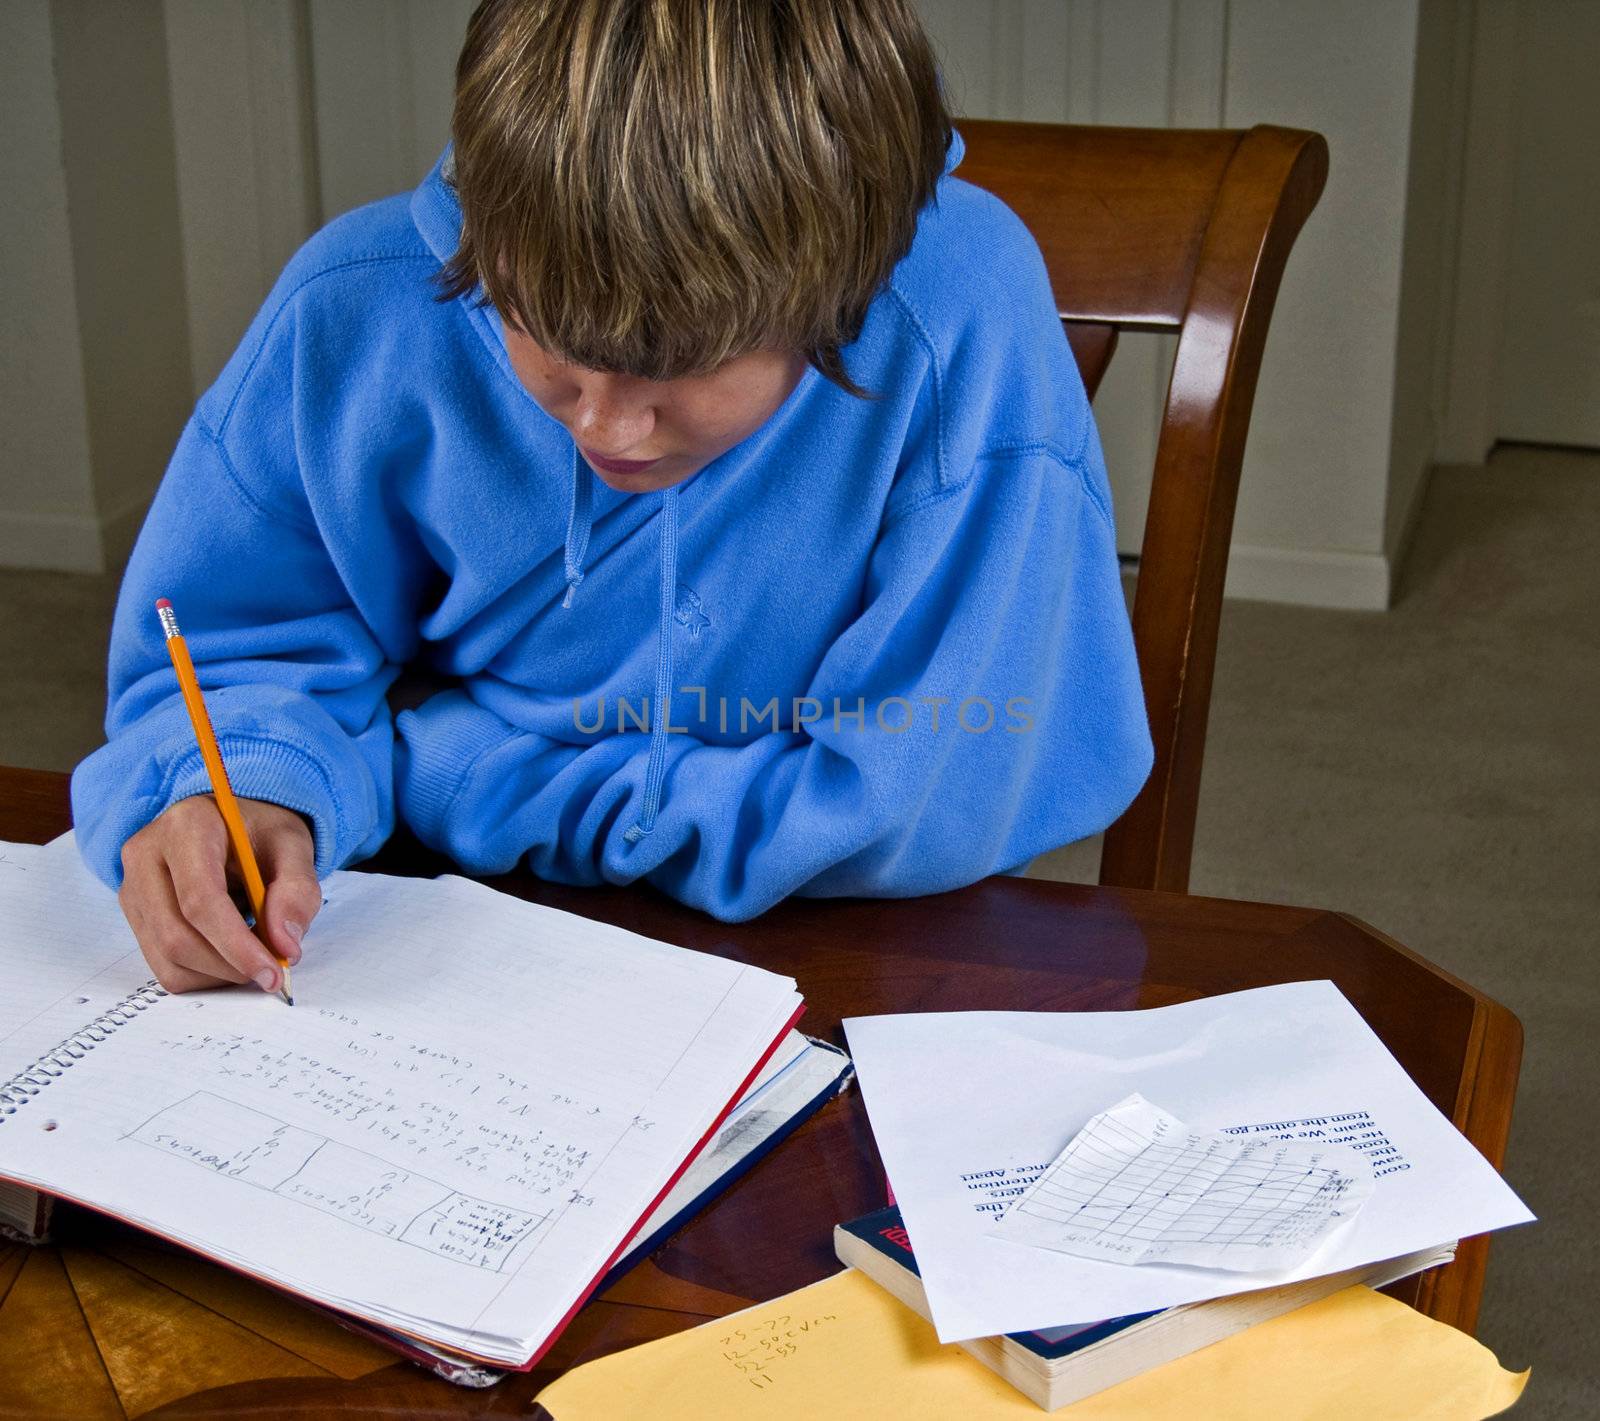 Teenager doing homework by rcarner